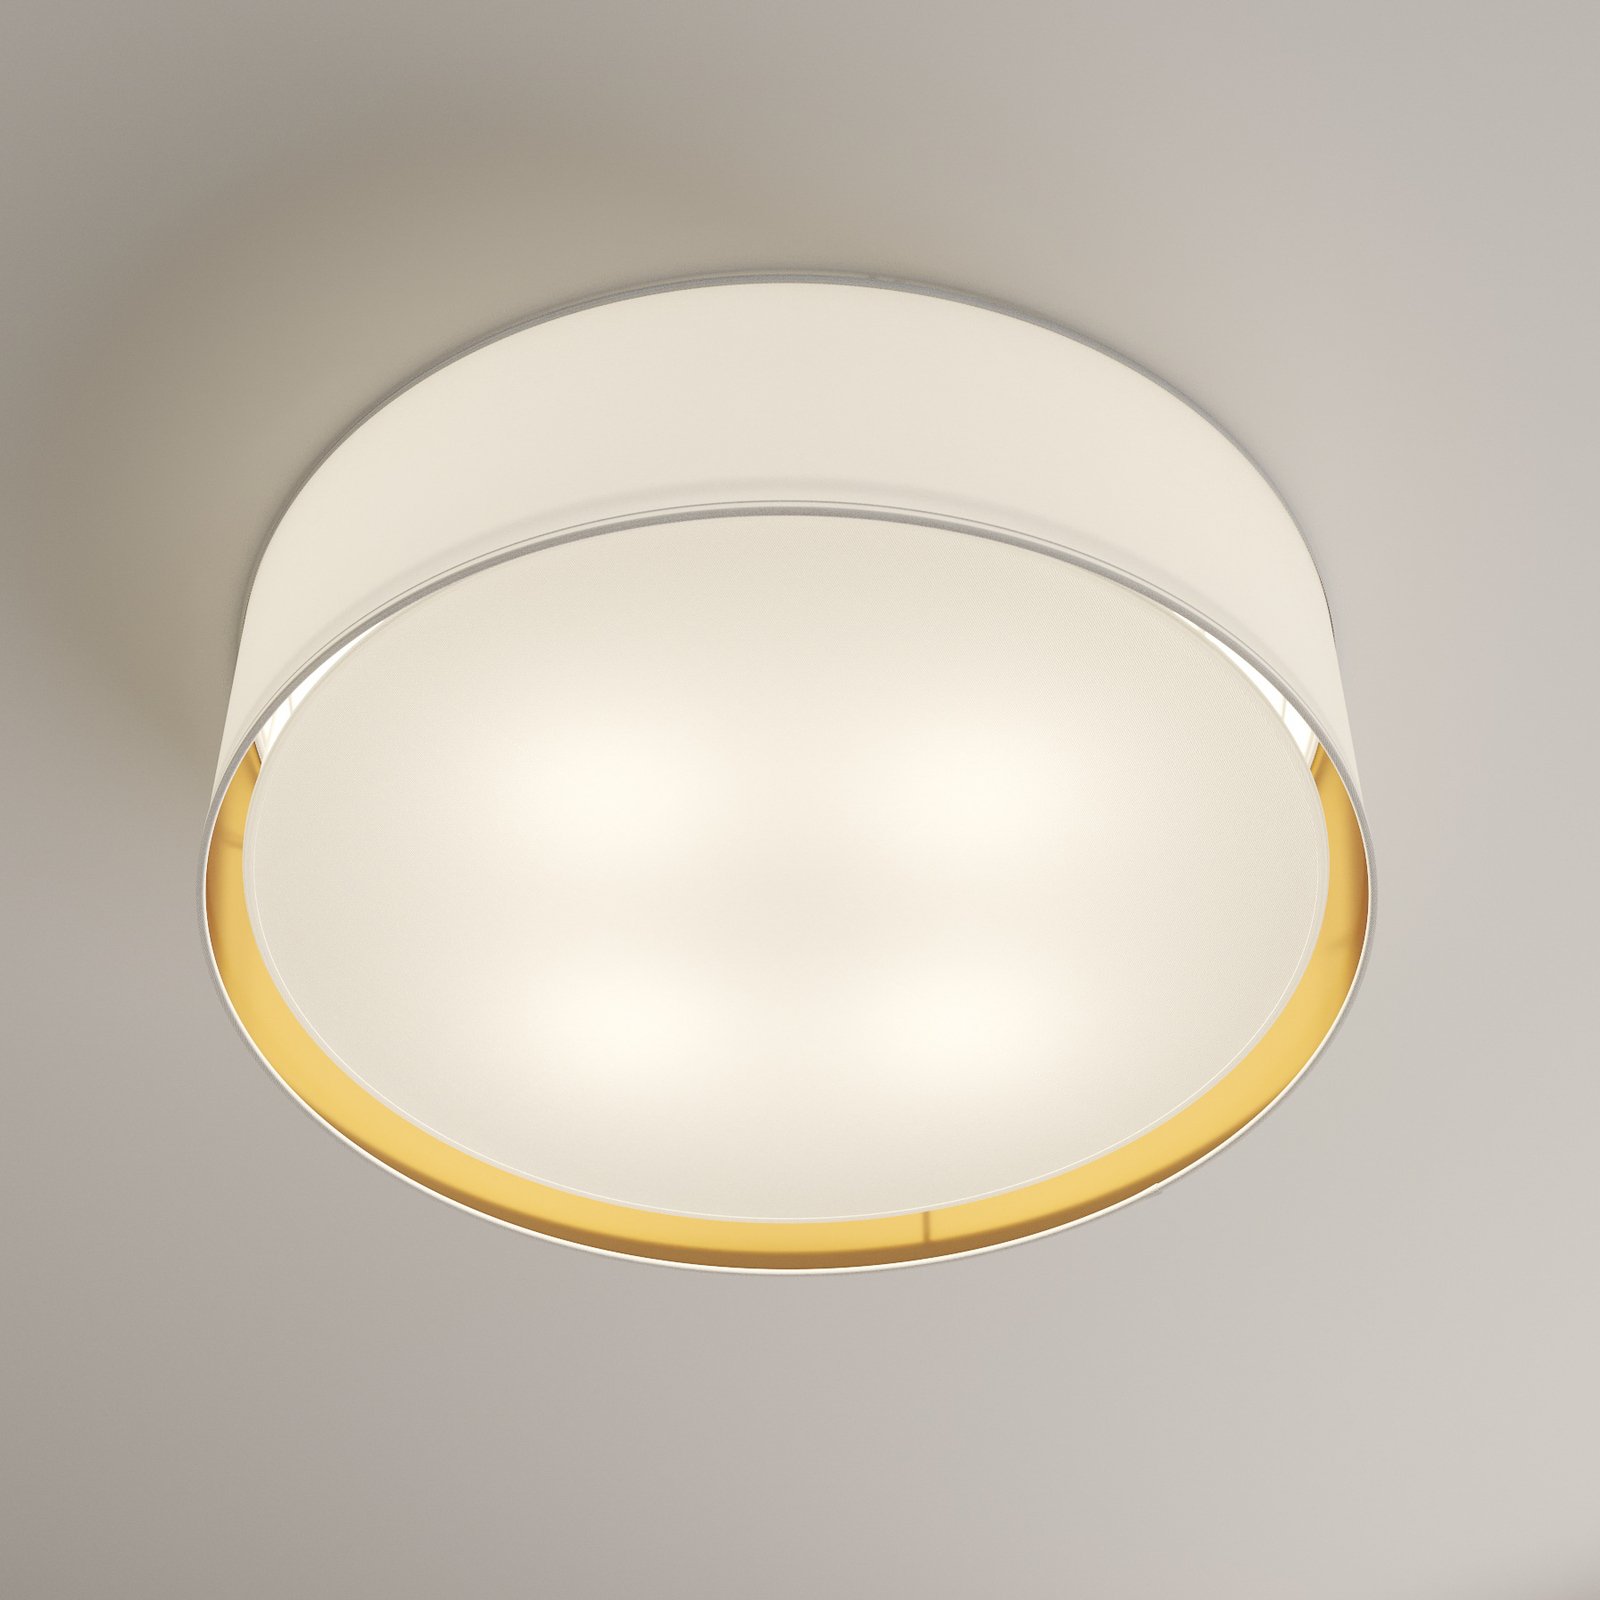 Bilbao plafondlamp, wit/goud, Ø 60 cm